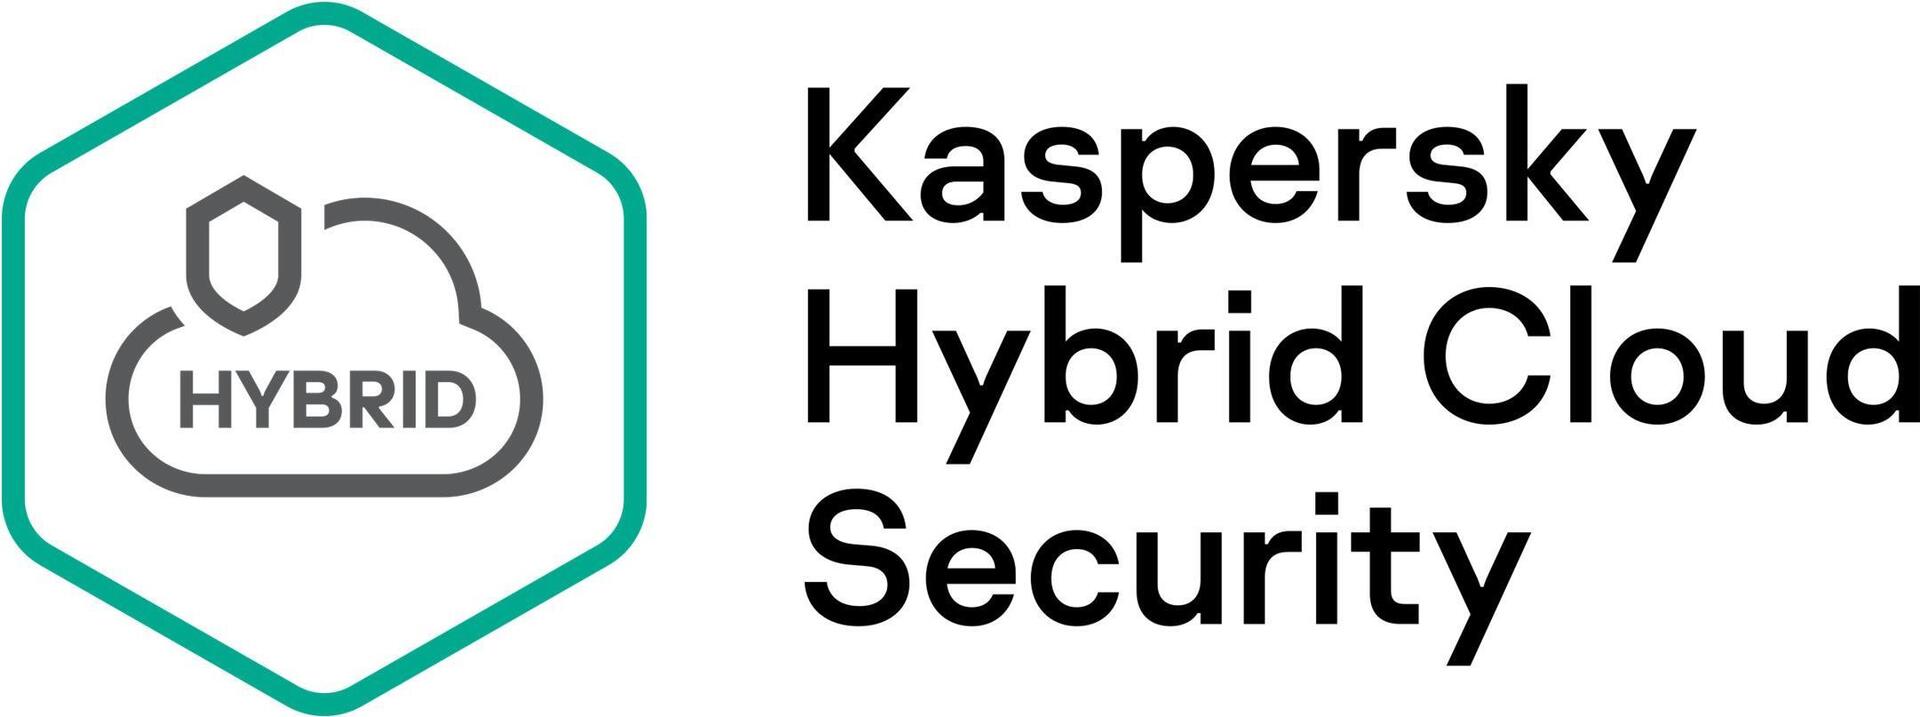 KASPERSKY Hybrid Cloud Security Enterprise CPU European Edition 10-14 CPU 2 year Renewal Plus License (KL4553XAKD9)